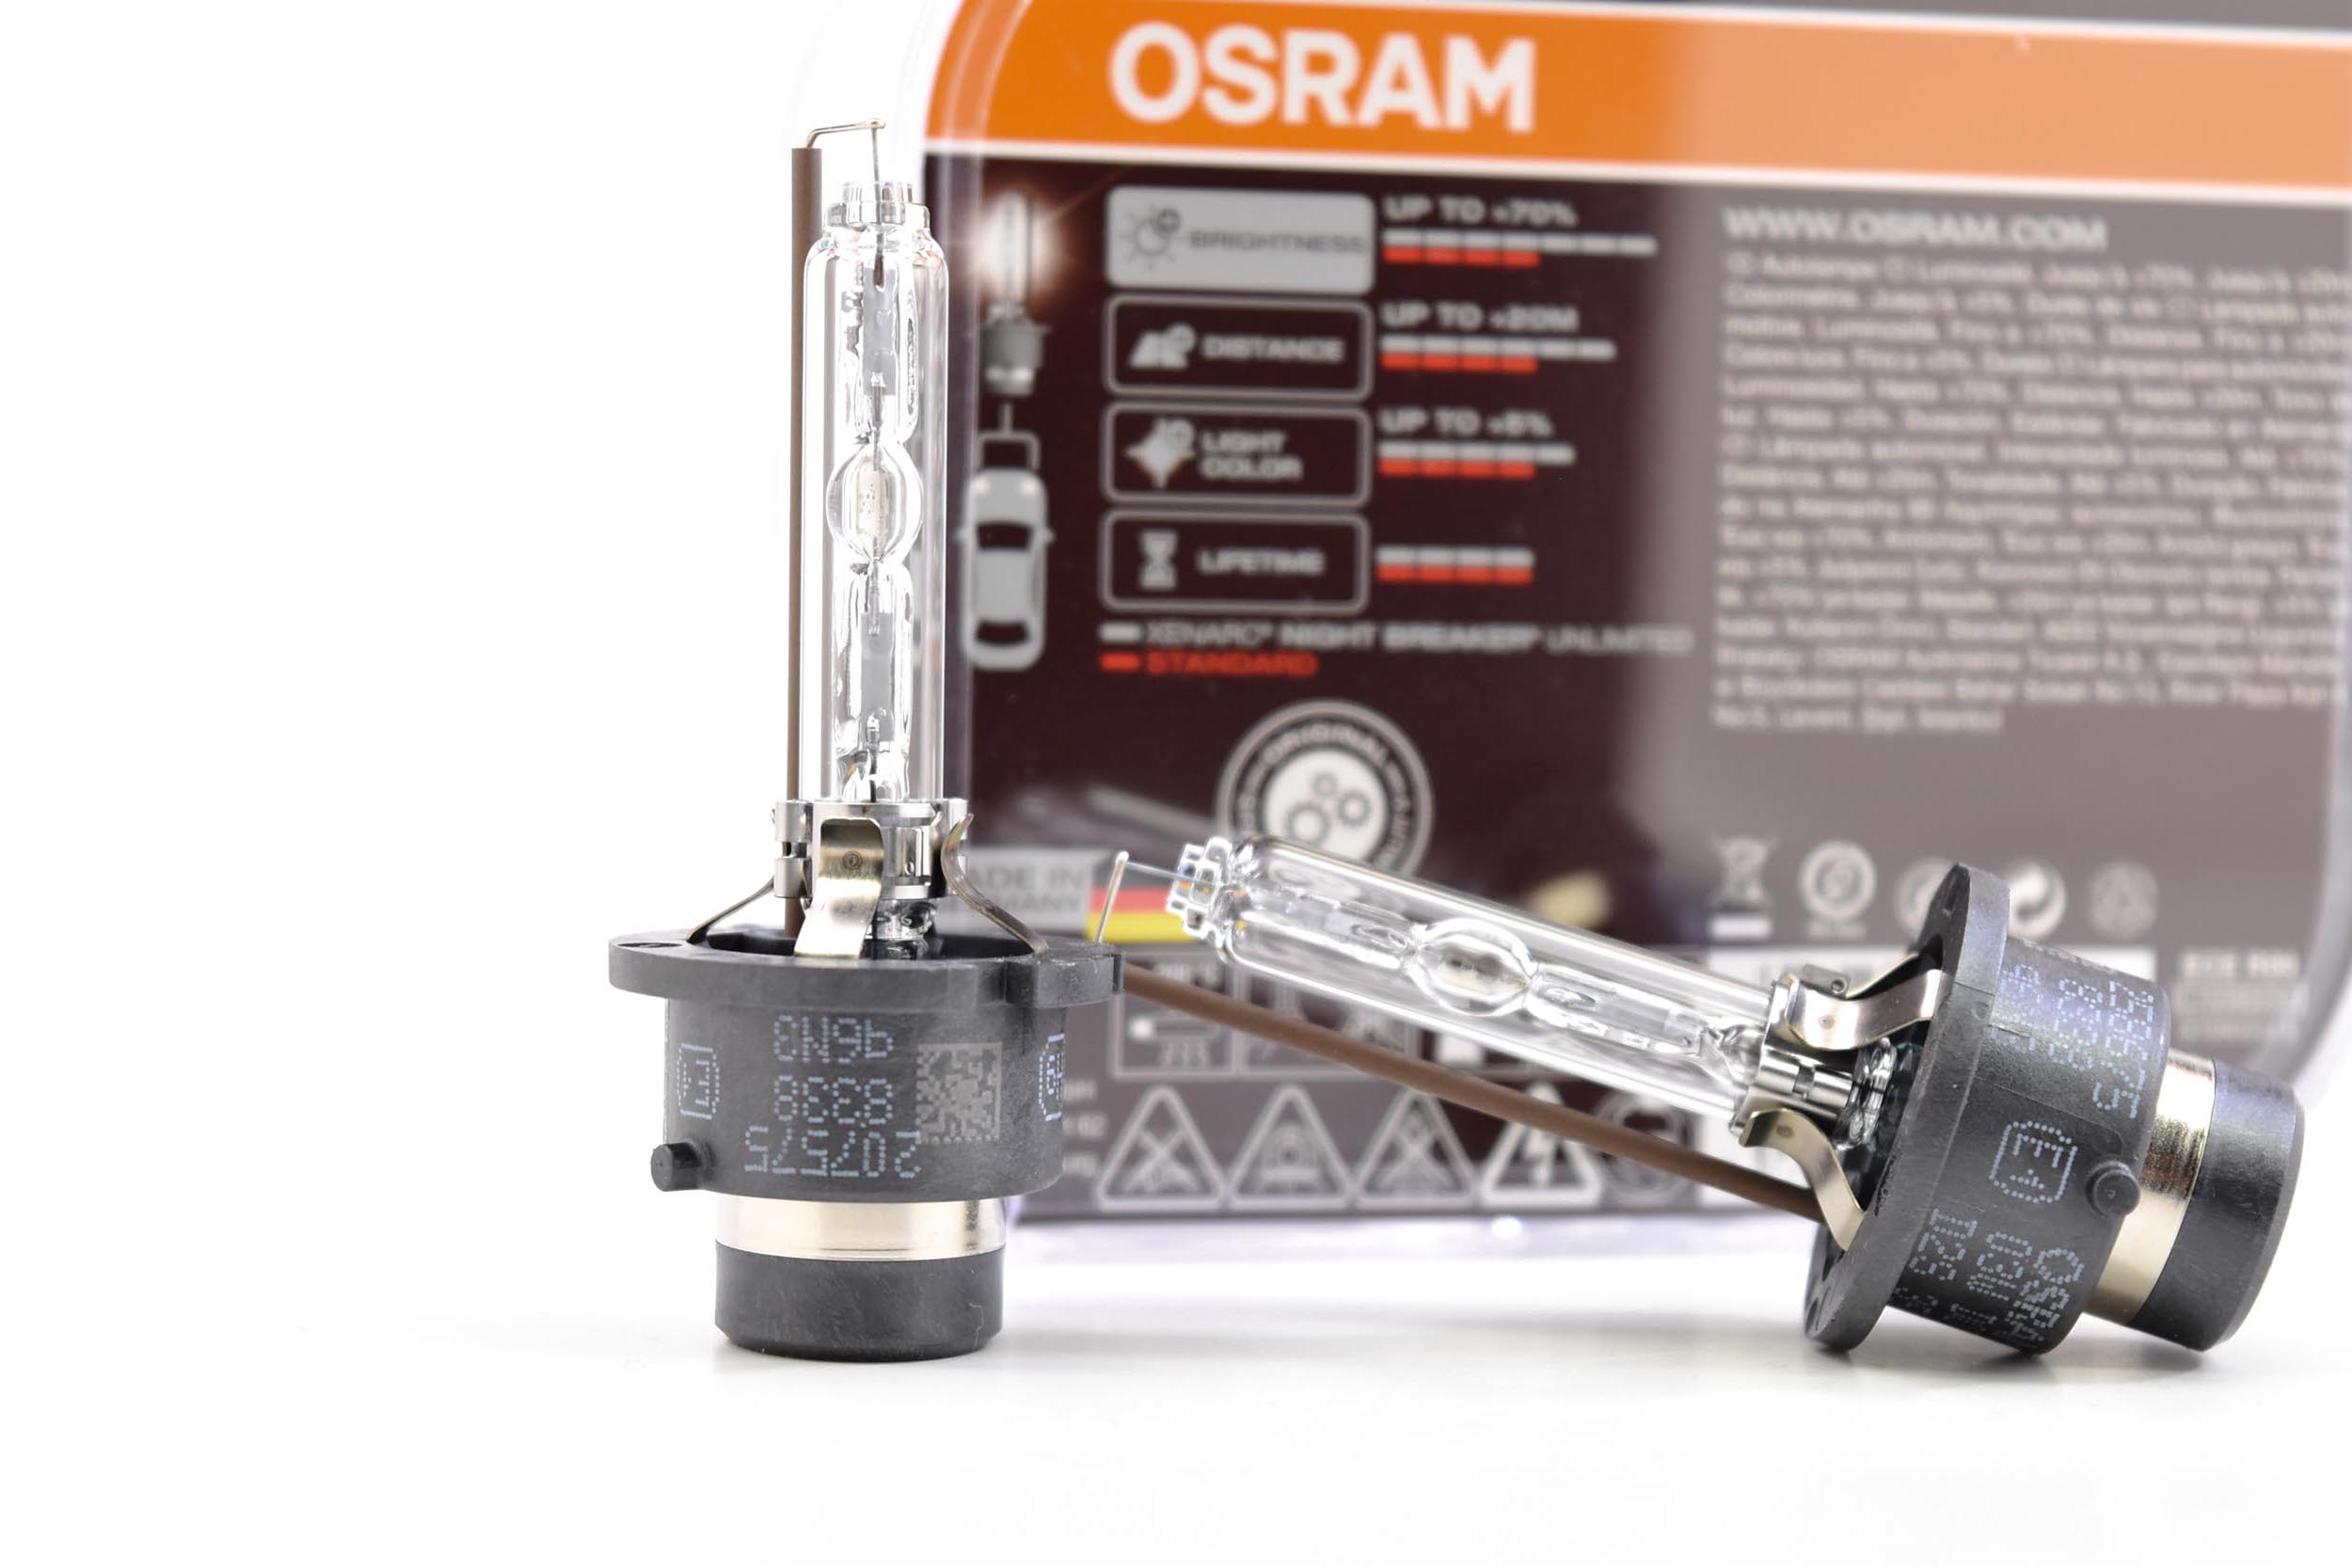 D2S Osram Night braker Laser Xenarc P32d-2 66240XNL Xenon35W